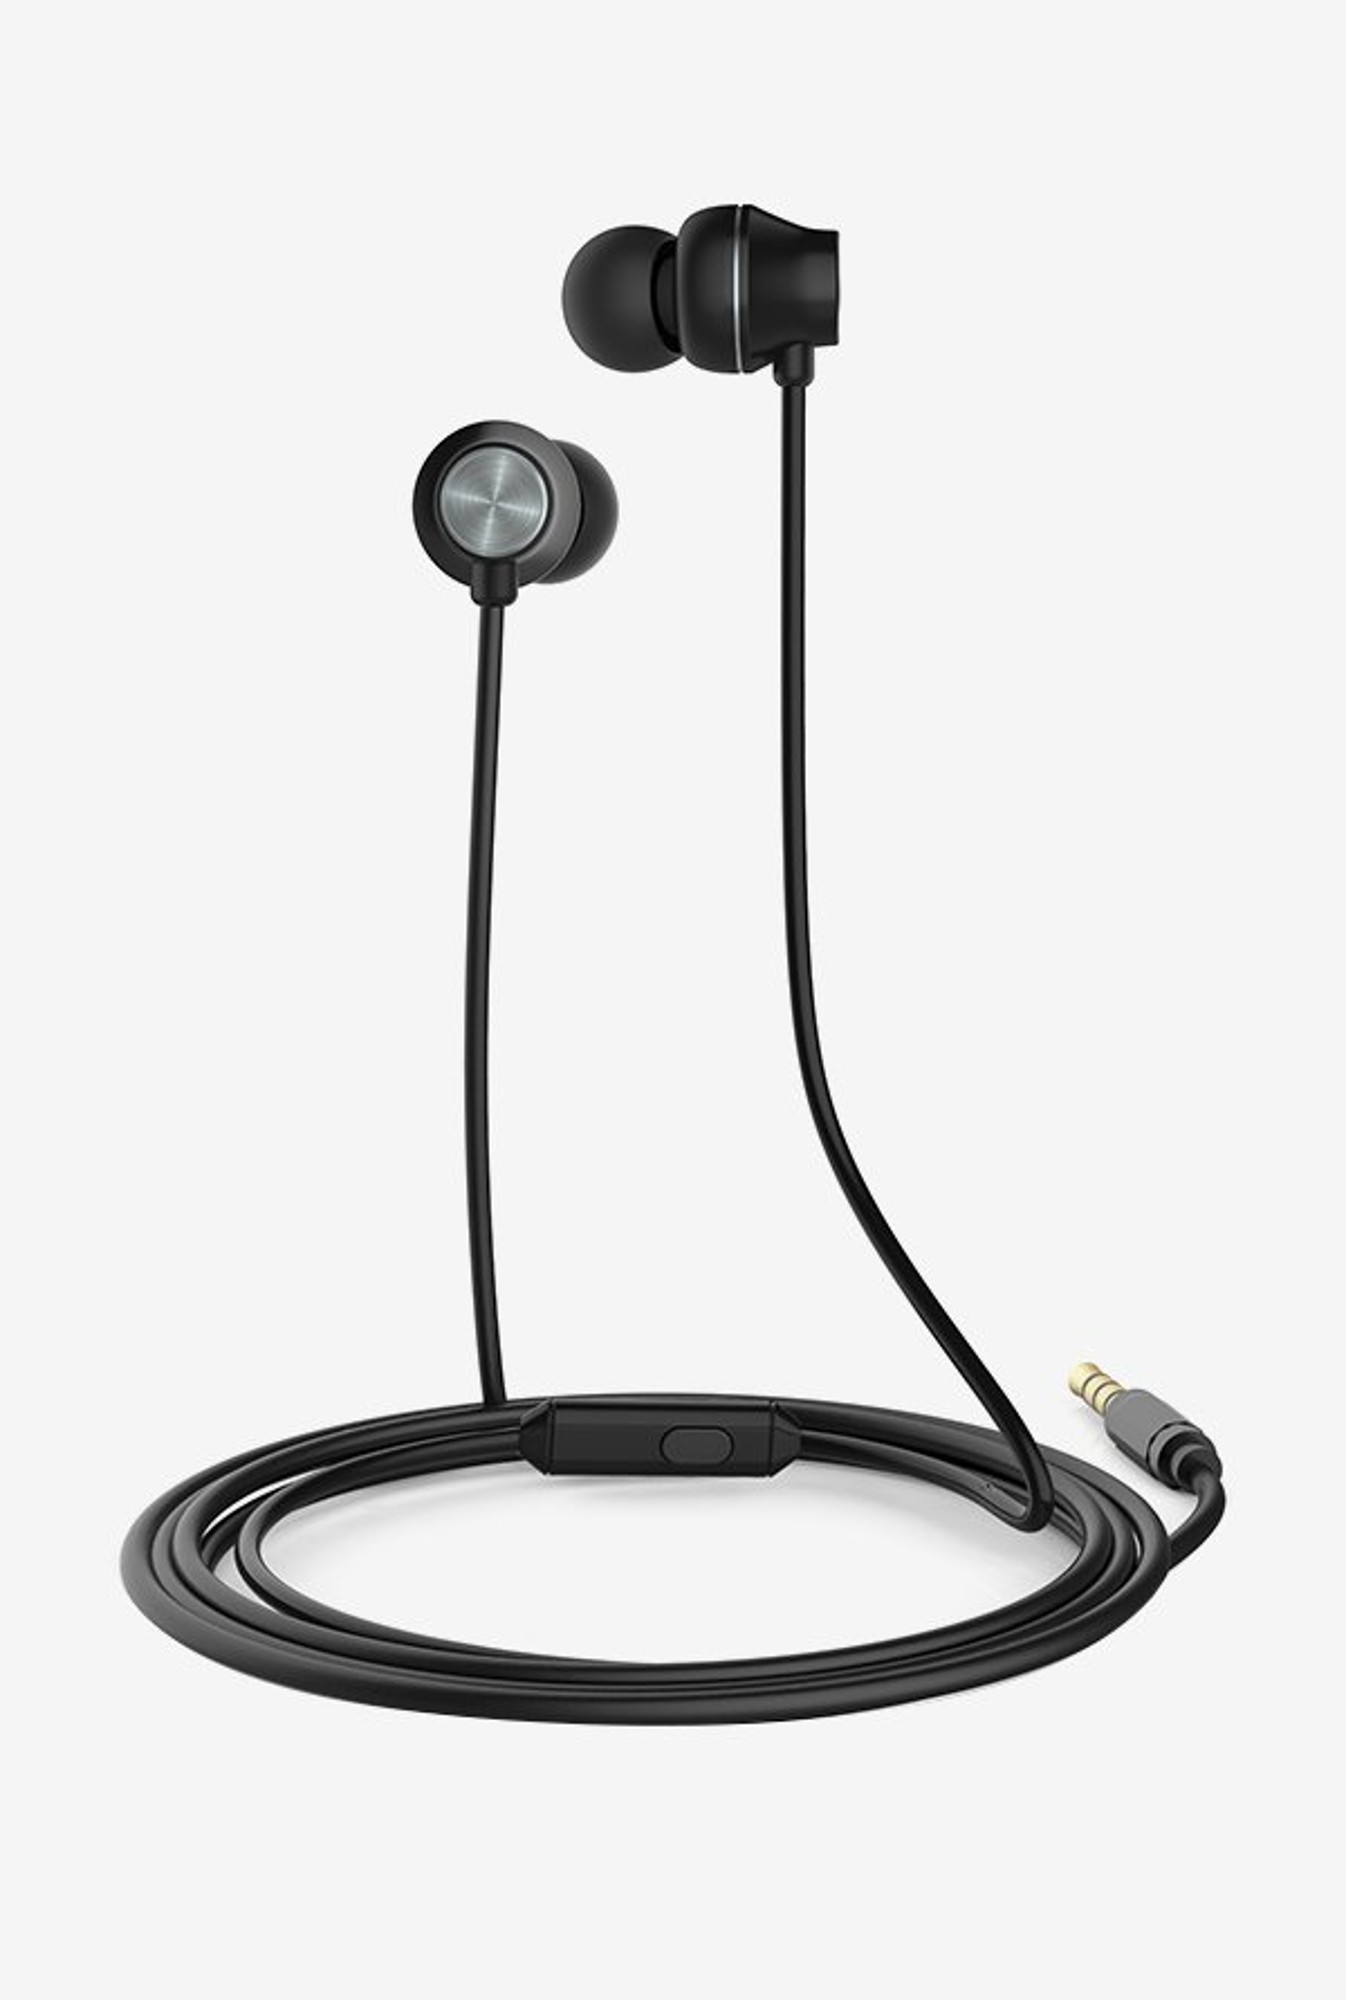 Tagg Soundgear 150 In the Ear Headphones (Black)